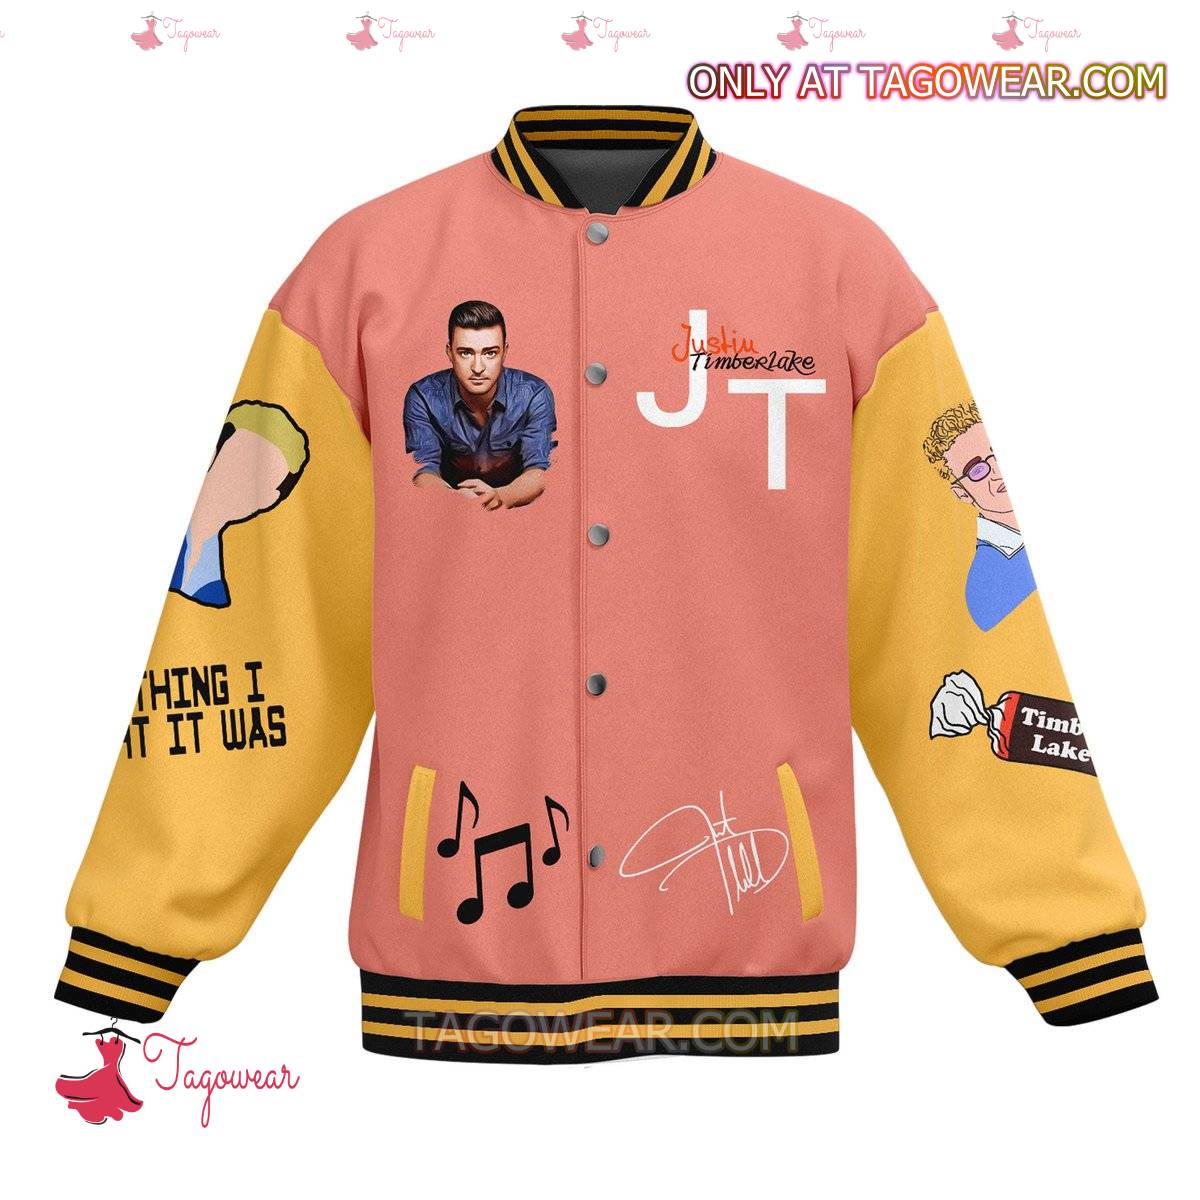 Justin Timberlake Everything I Thought It Was Baseball Jacket a